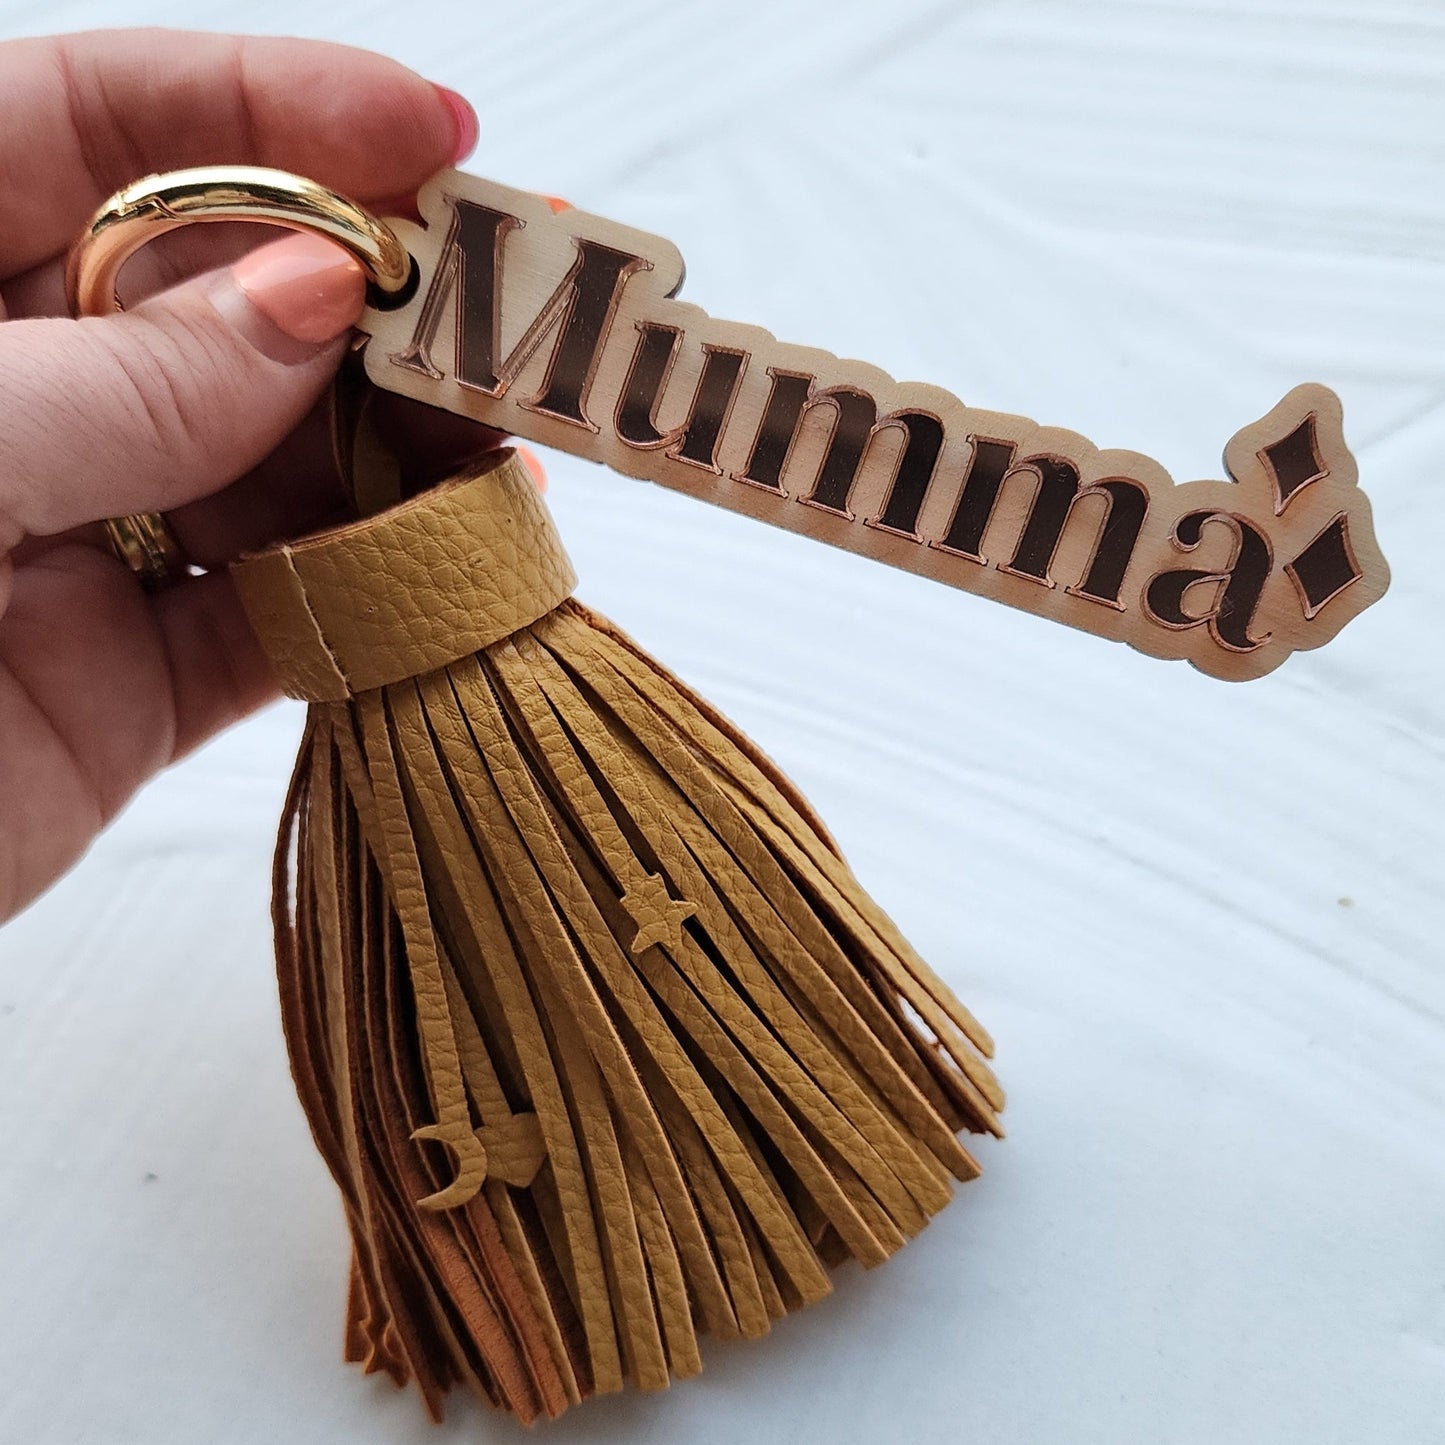 Mumma Charm with Leather Tassel